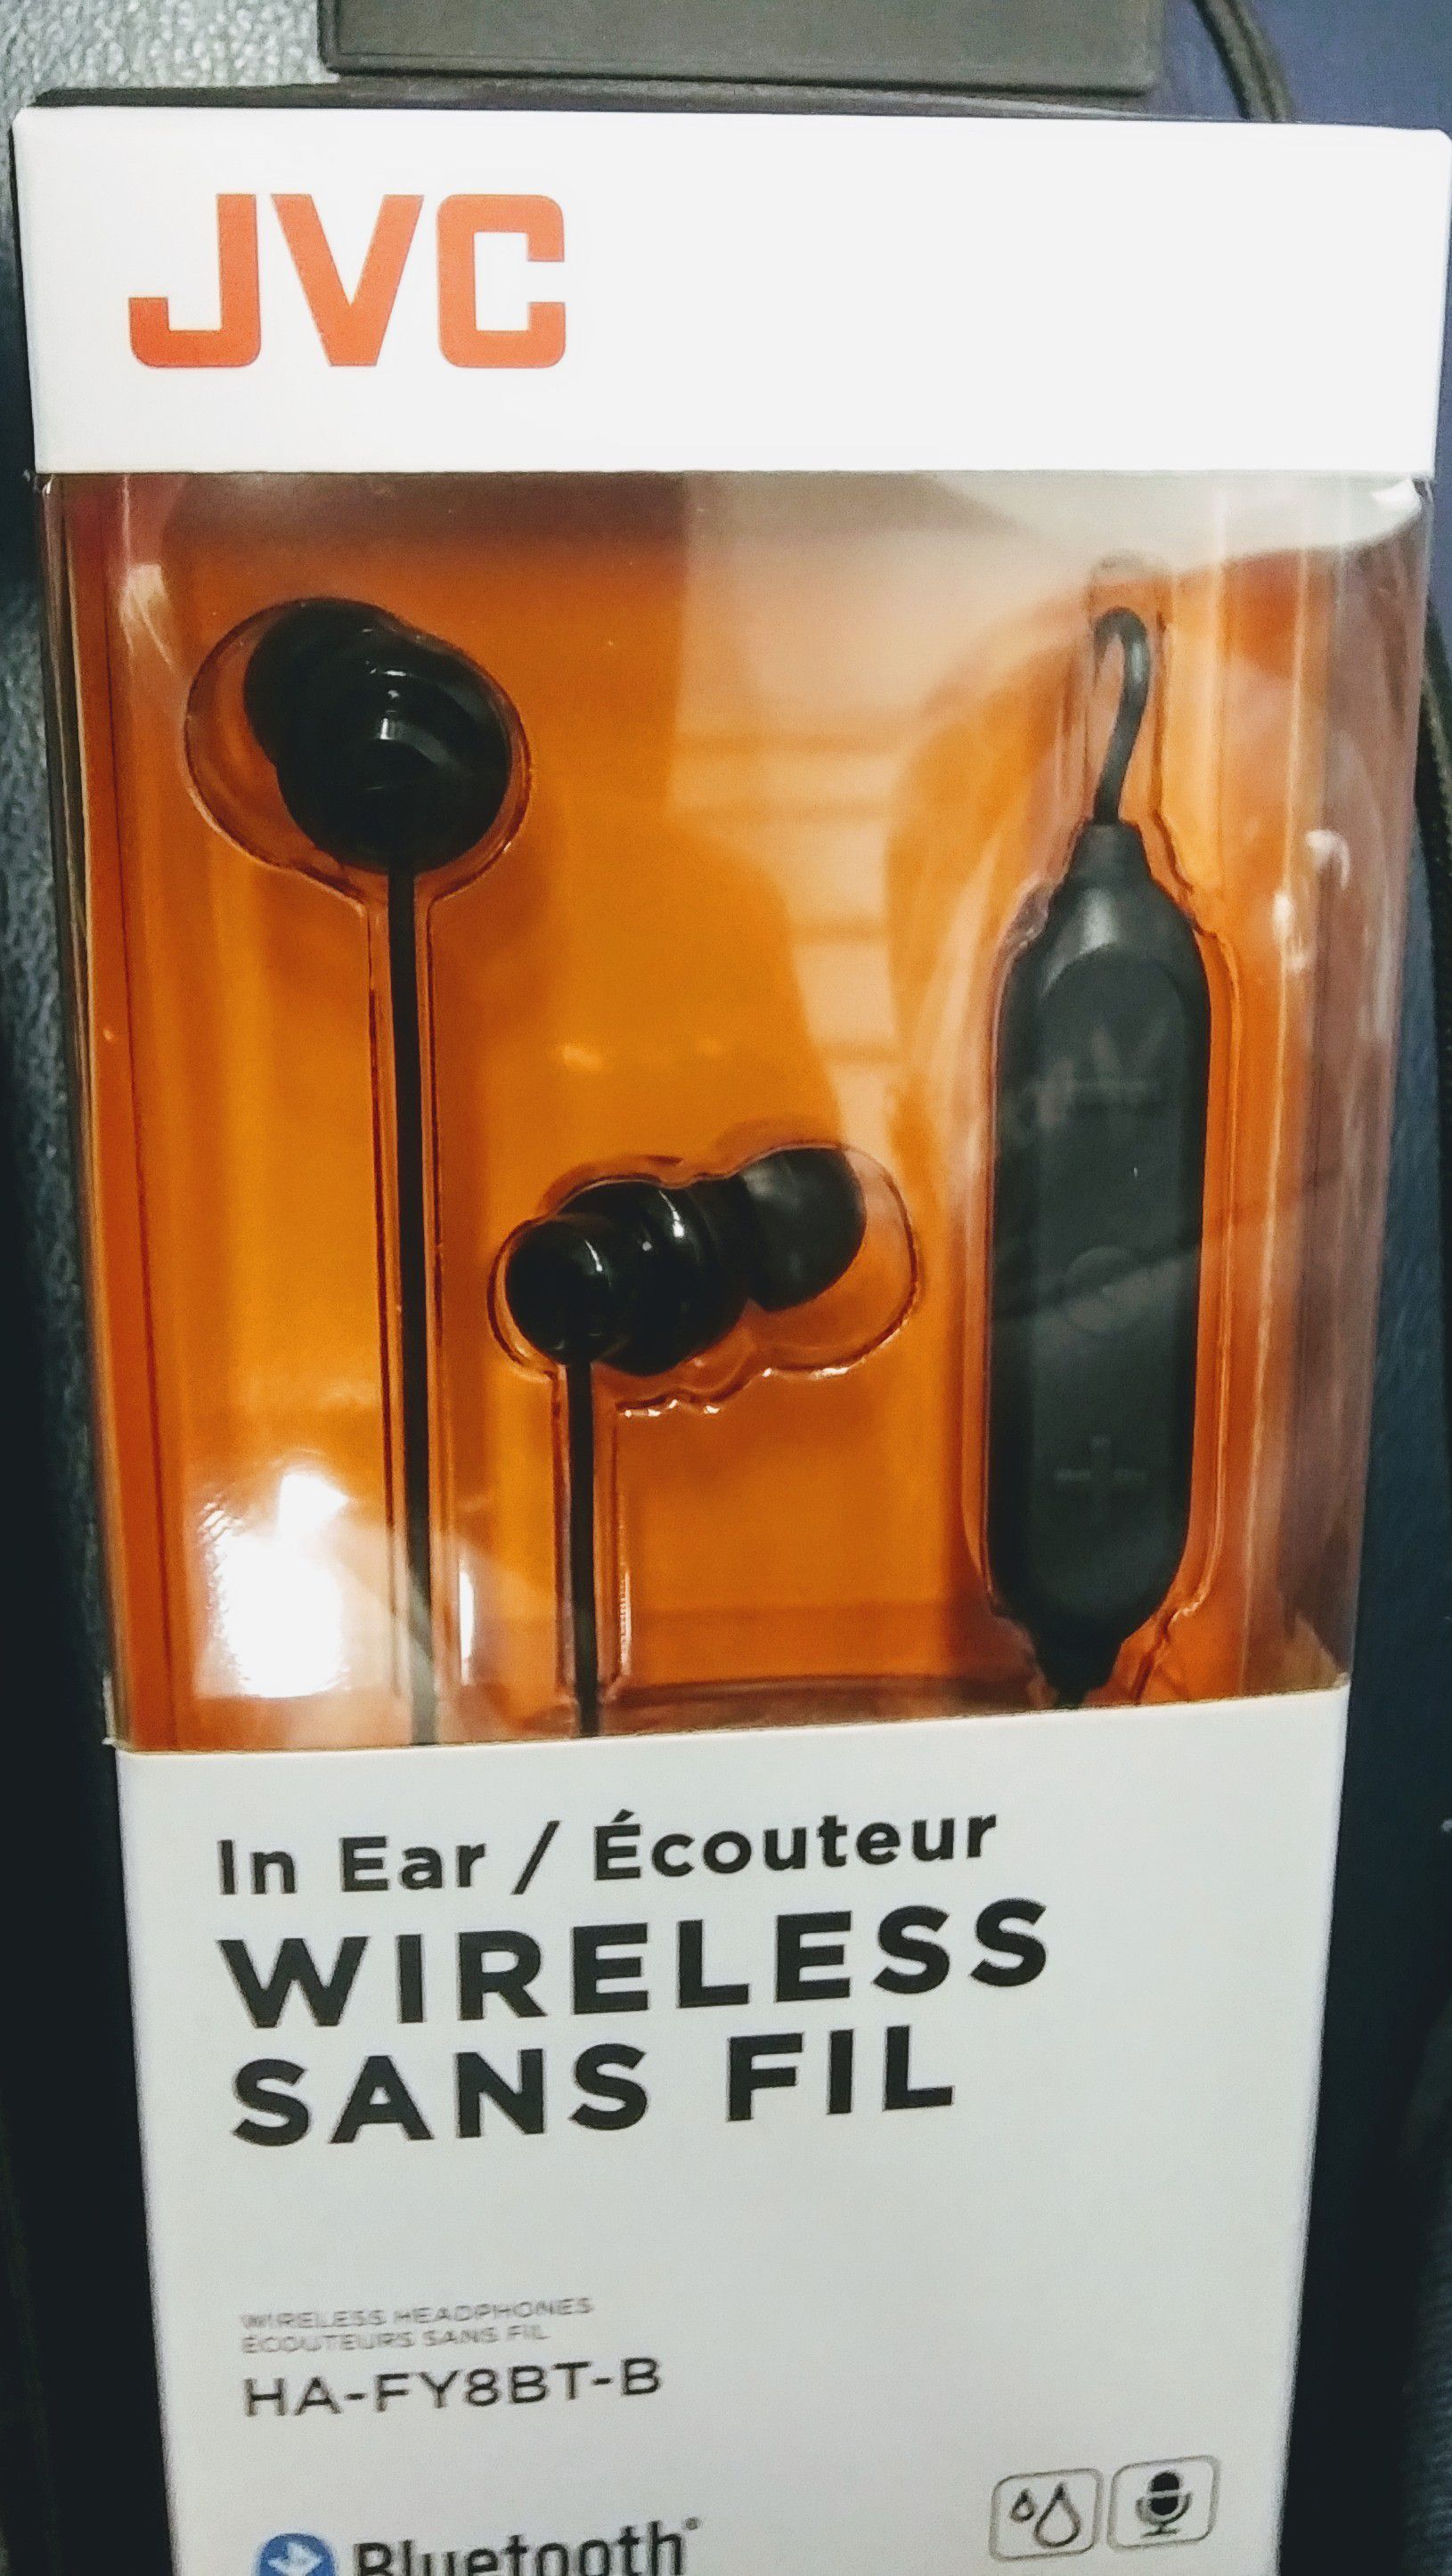 Jvc Bluetooth earbuds